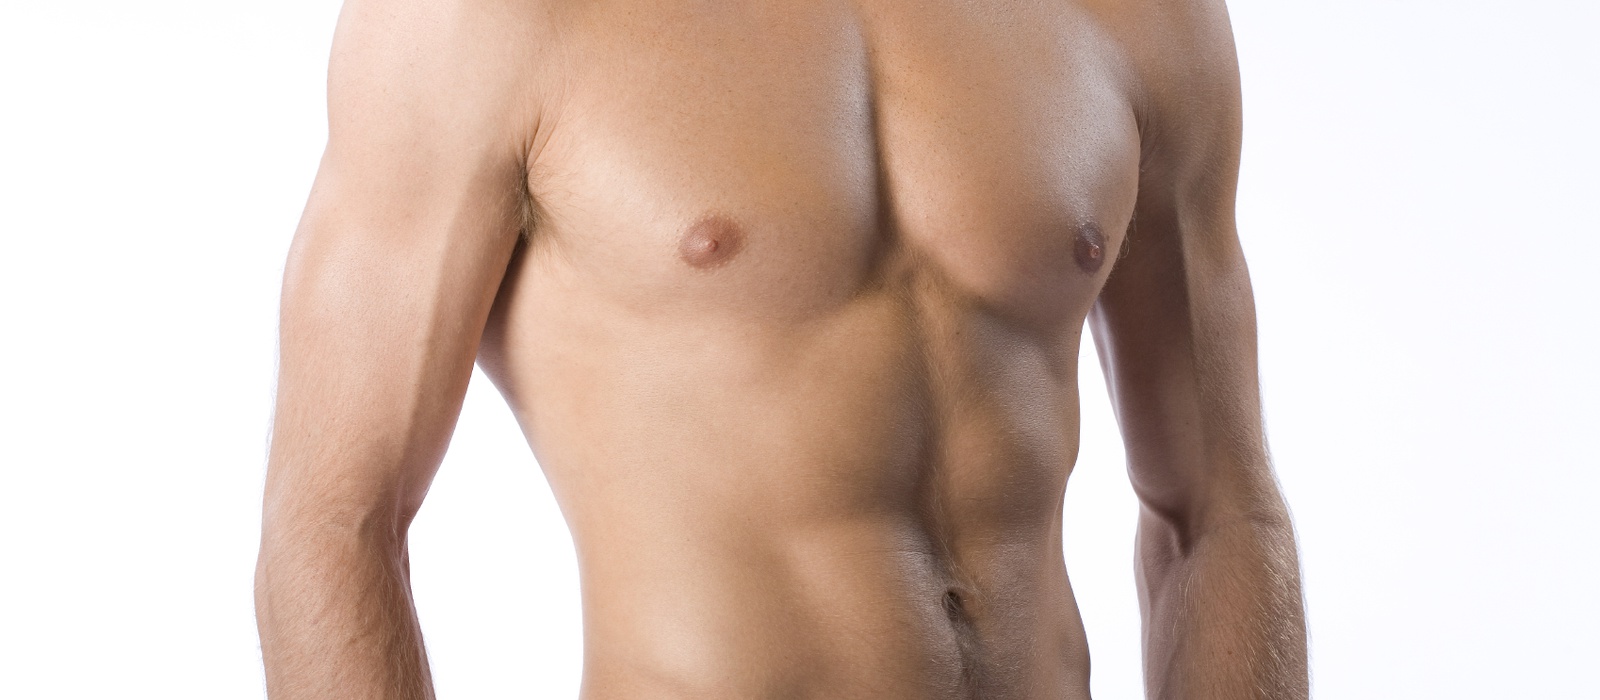 эпиляция груди у мужчин фото 37